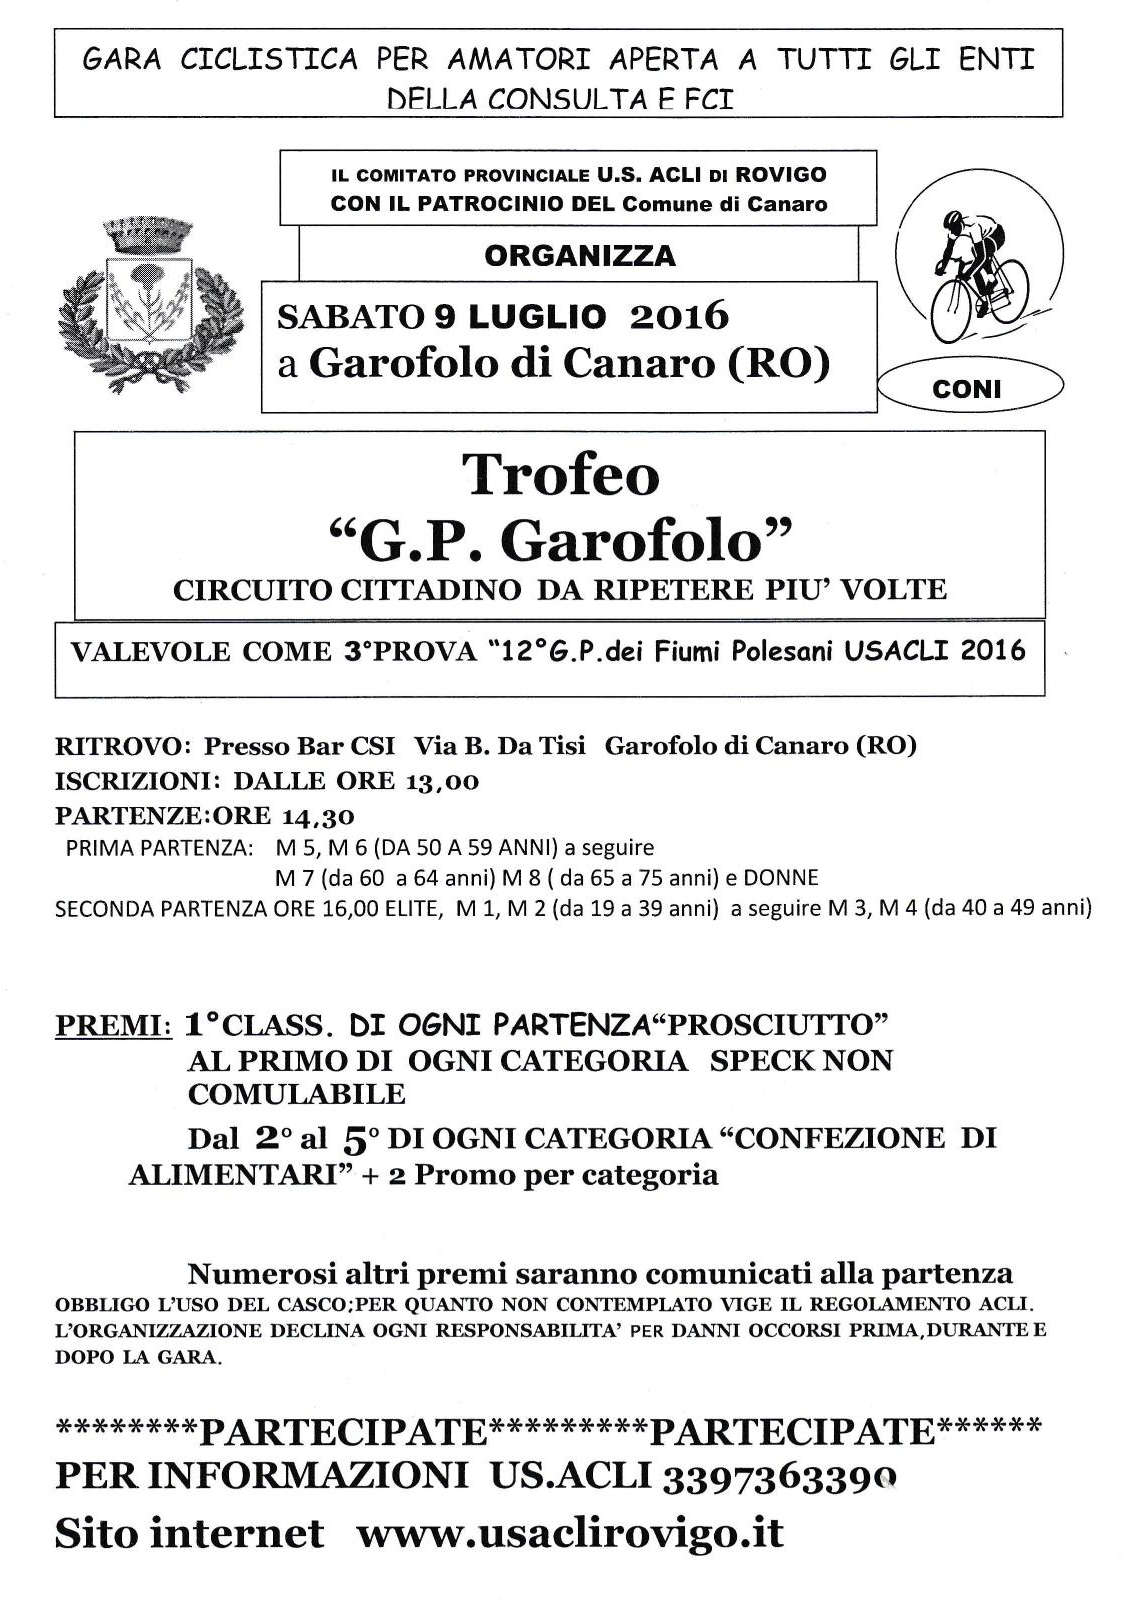 Sabato 9 luglio 2016 - Trofeo G.P. Garofolo - Garofolo di Canaro (RO) - 3^ prova G.P. Fiumi Polesani U.S.Acli 2016